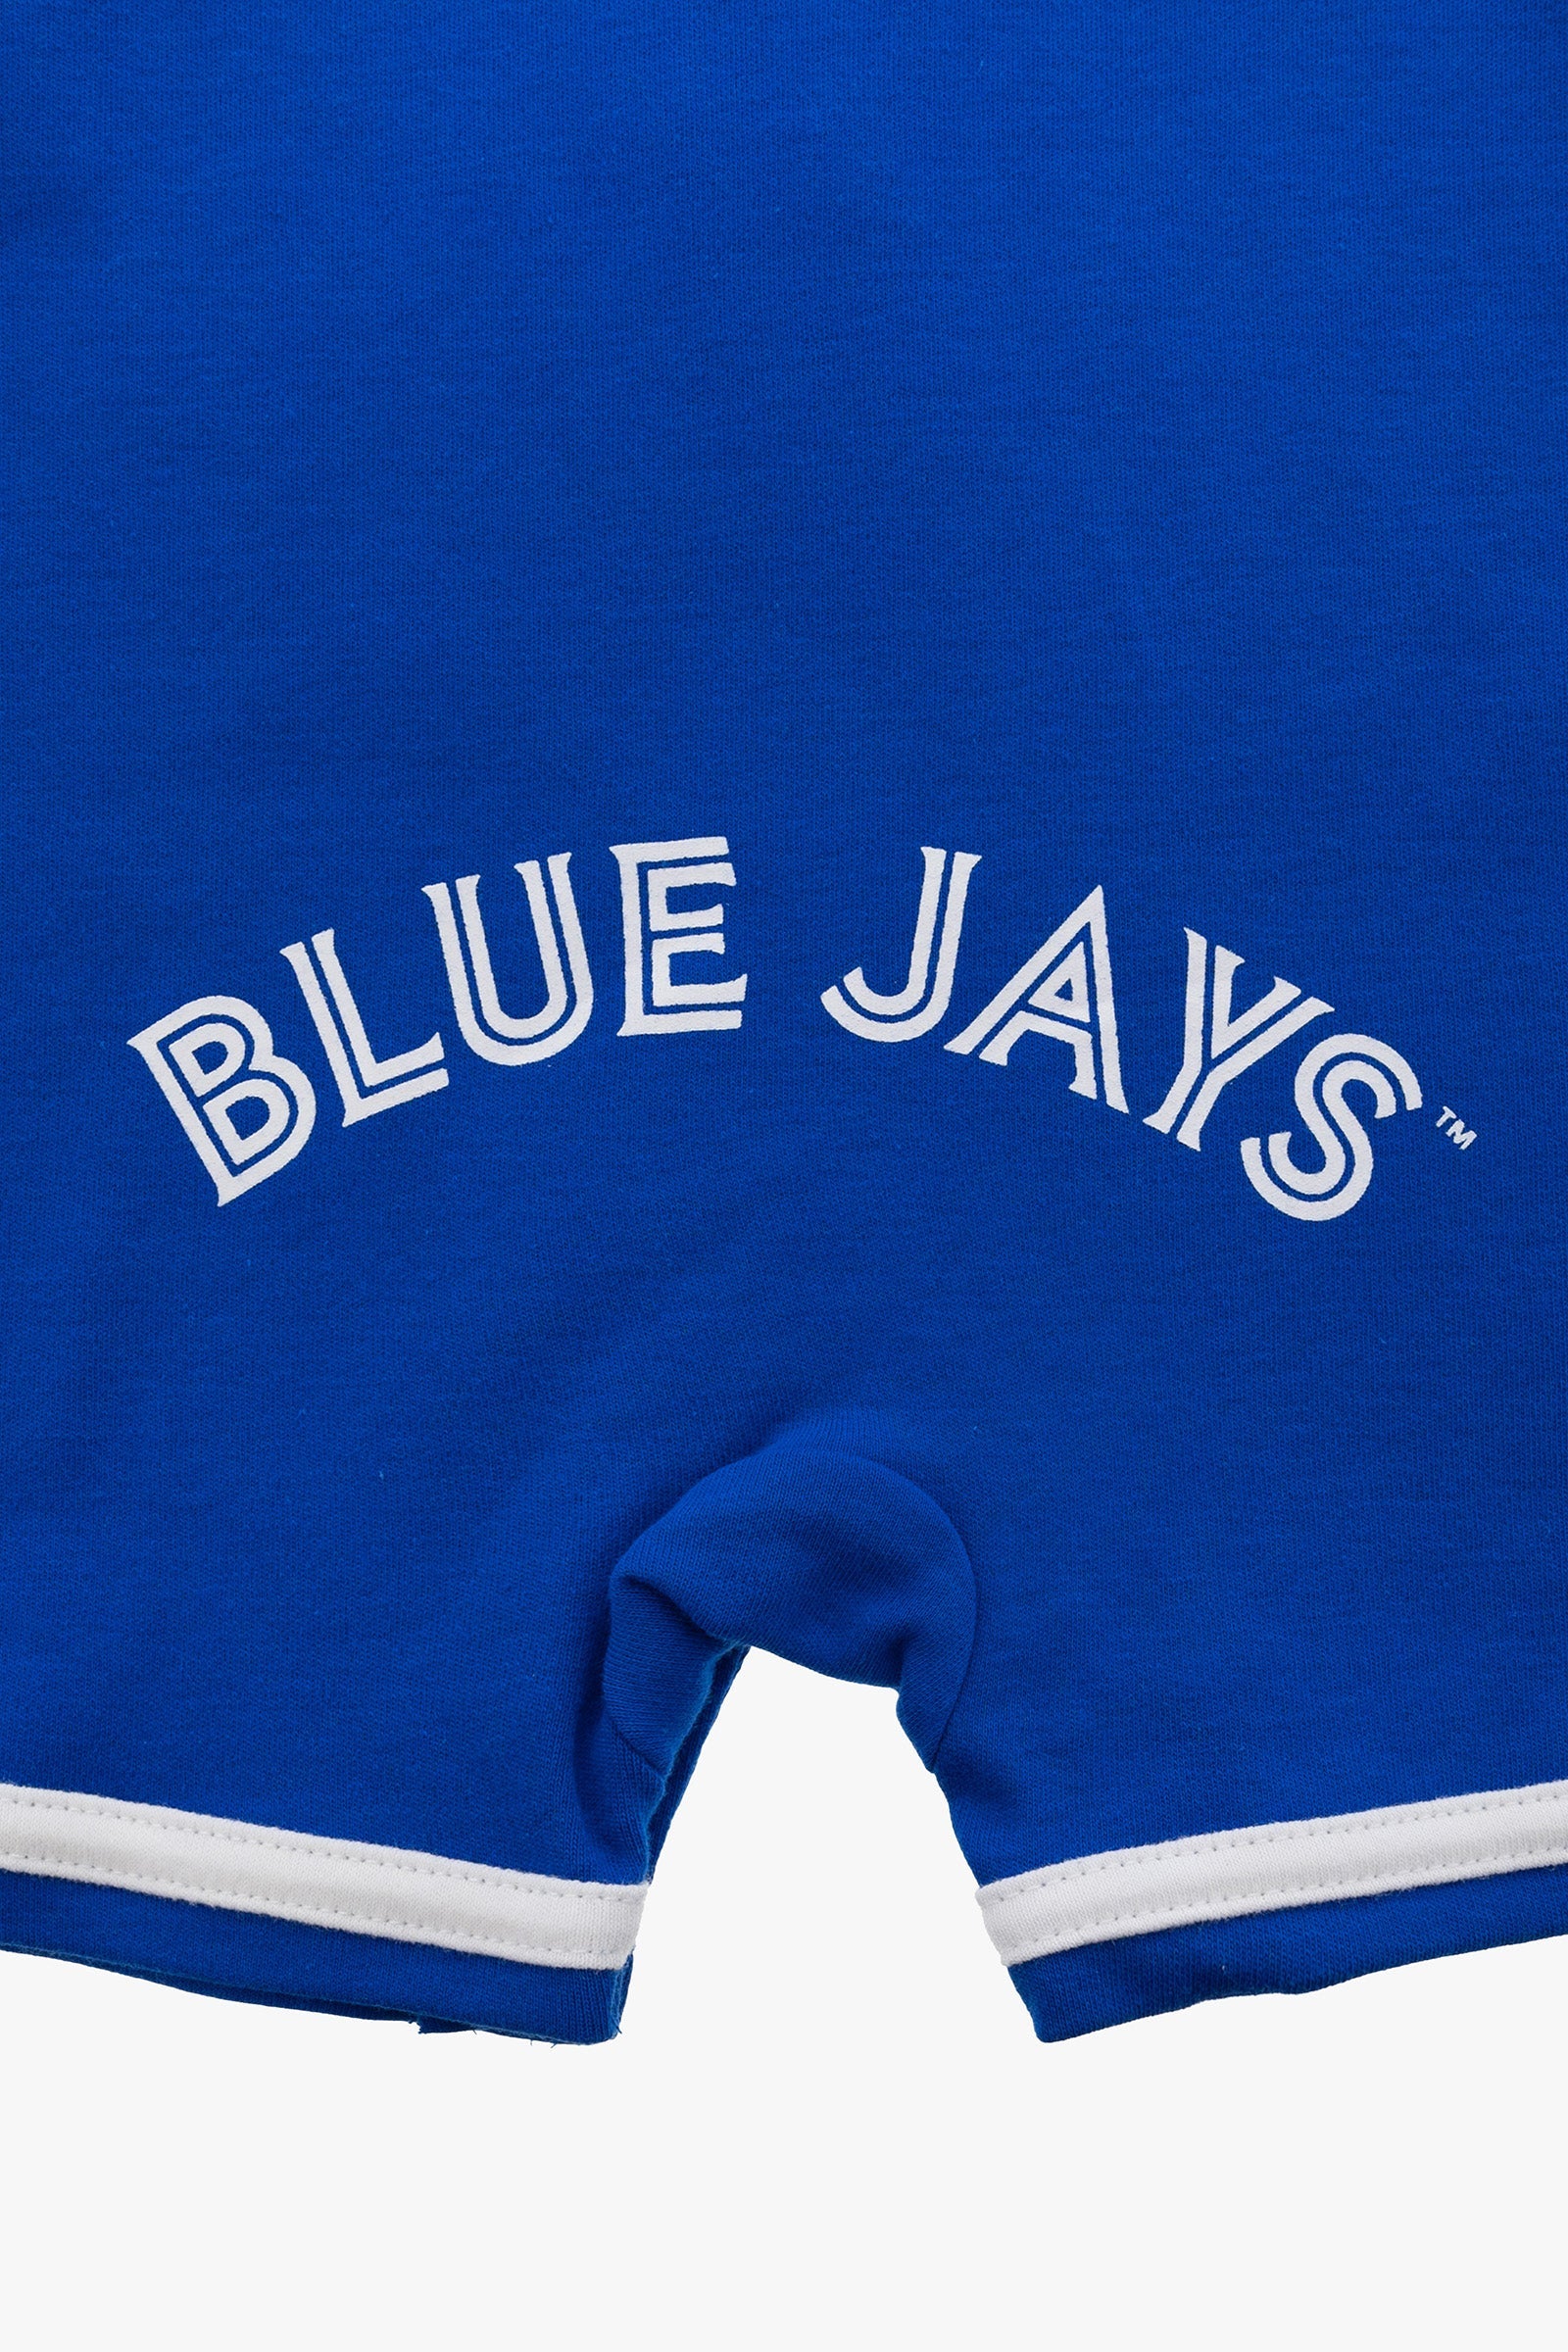 Gertex MLB Toronto Blue Jays Baby Romper